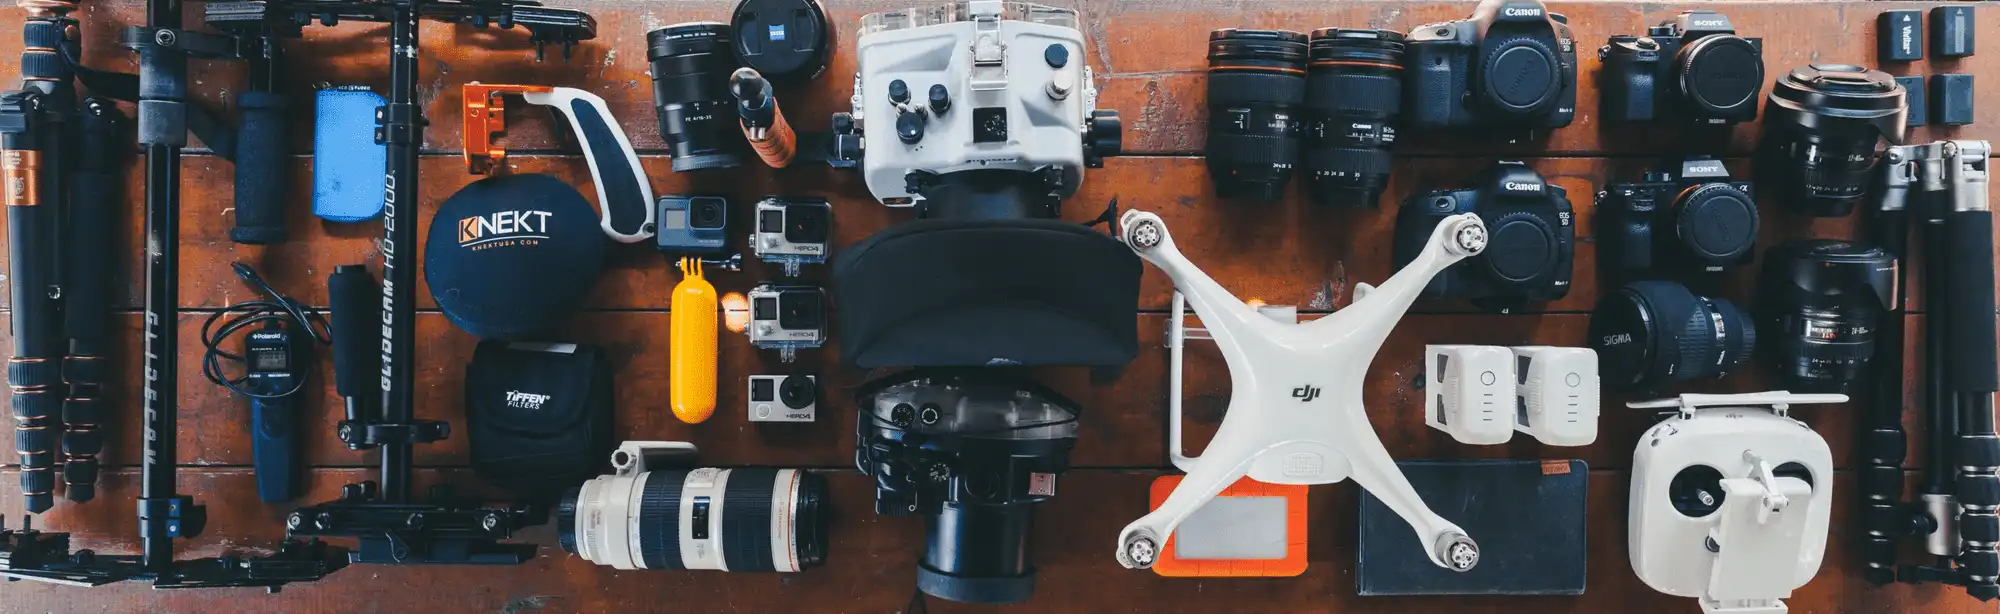 Photographer's devices